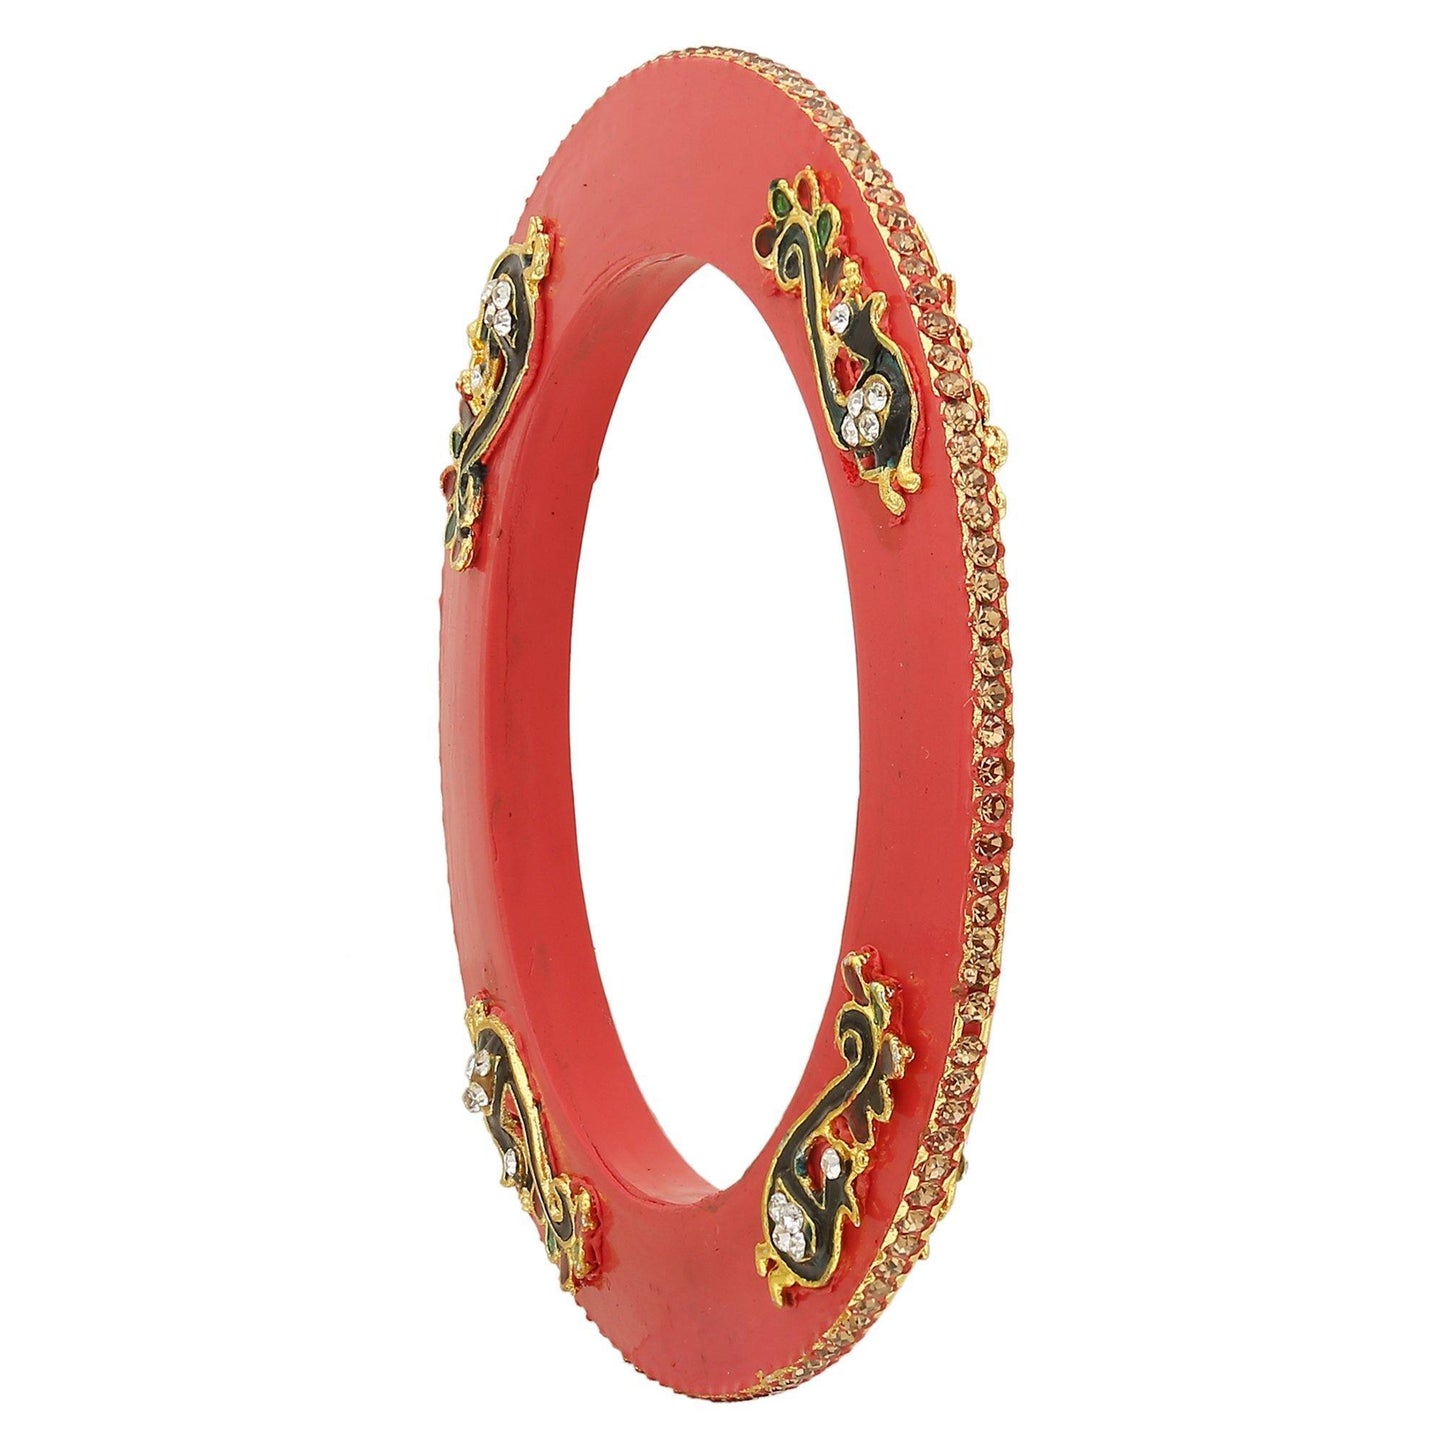 sukriti rajputi royal peacock embellished lac kada pink bangles jewelry for women - set of 2